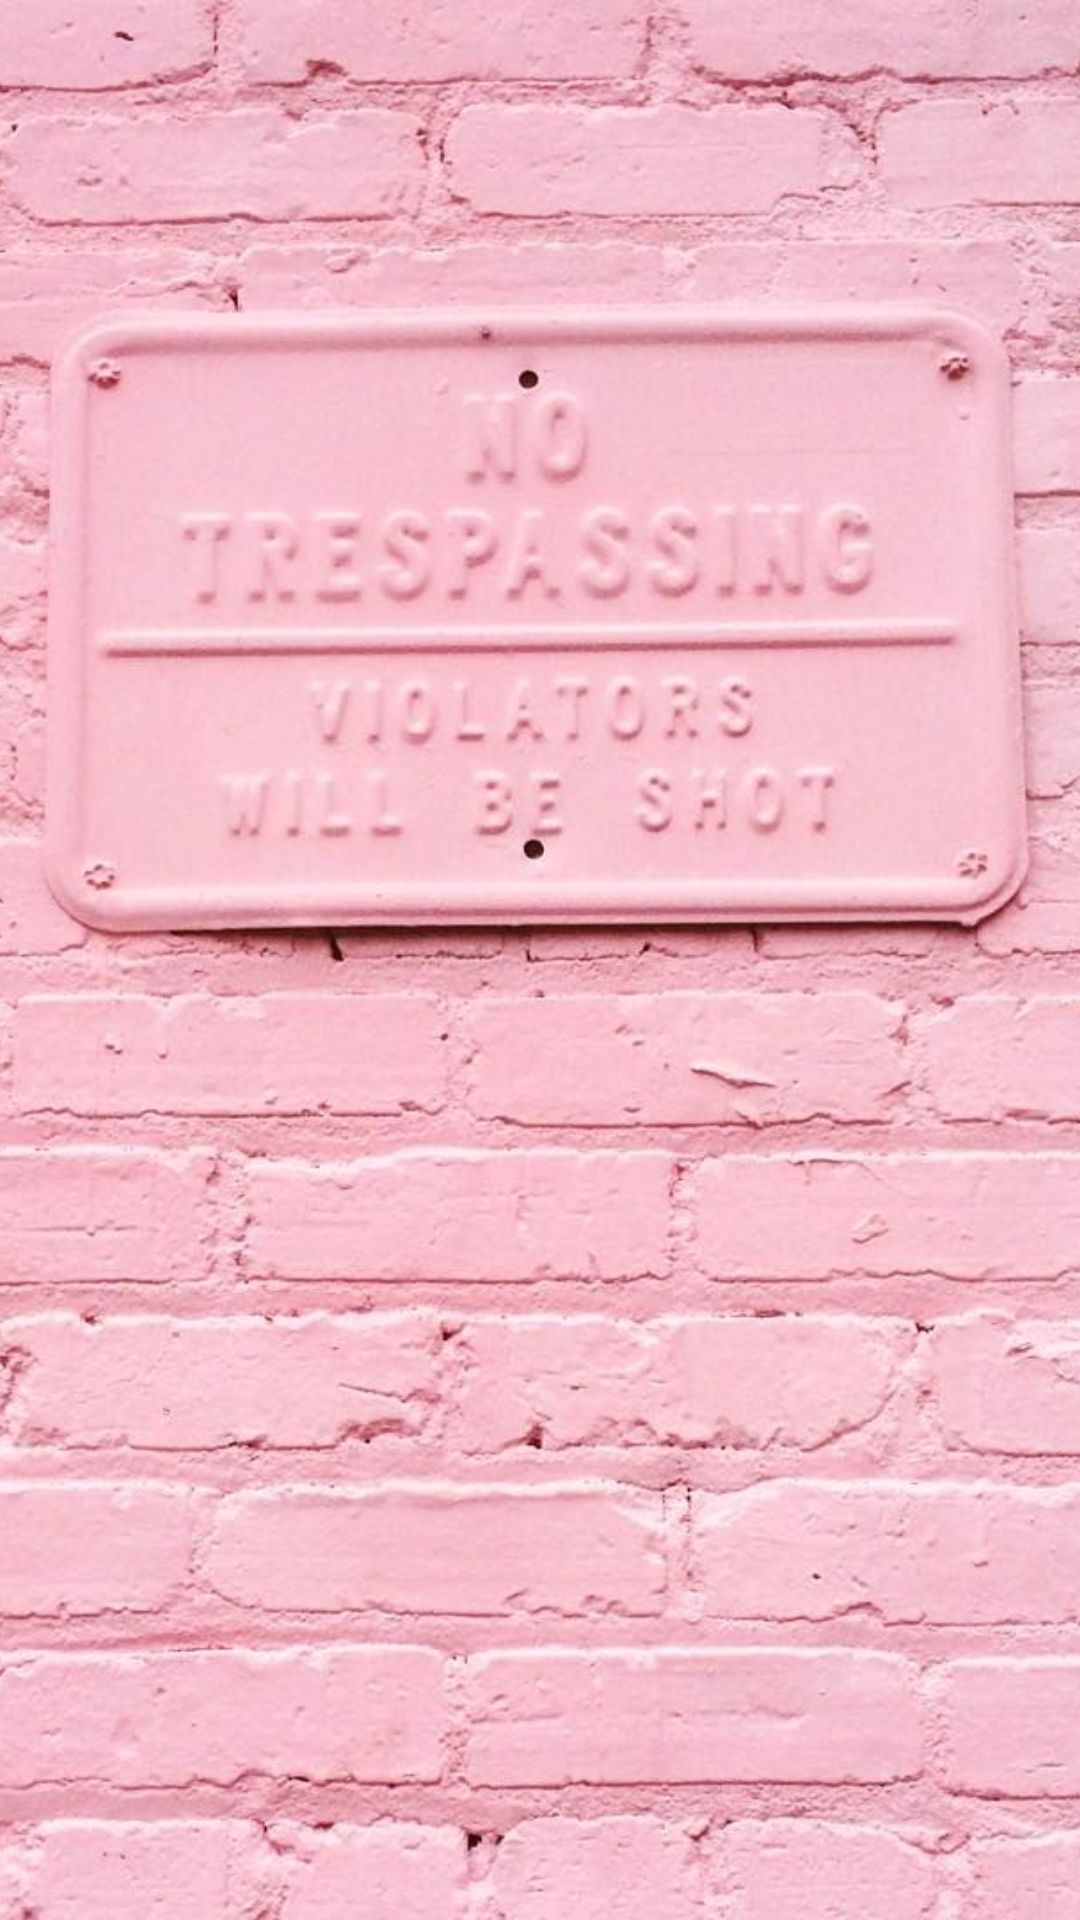 A pink no trespassing sign on a pink brick wall. - Pink phone